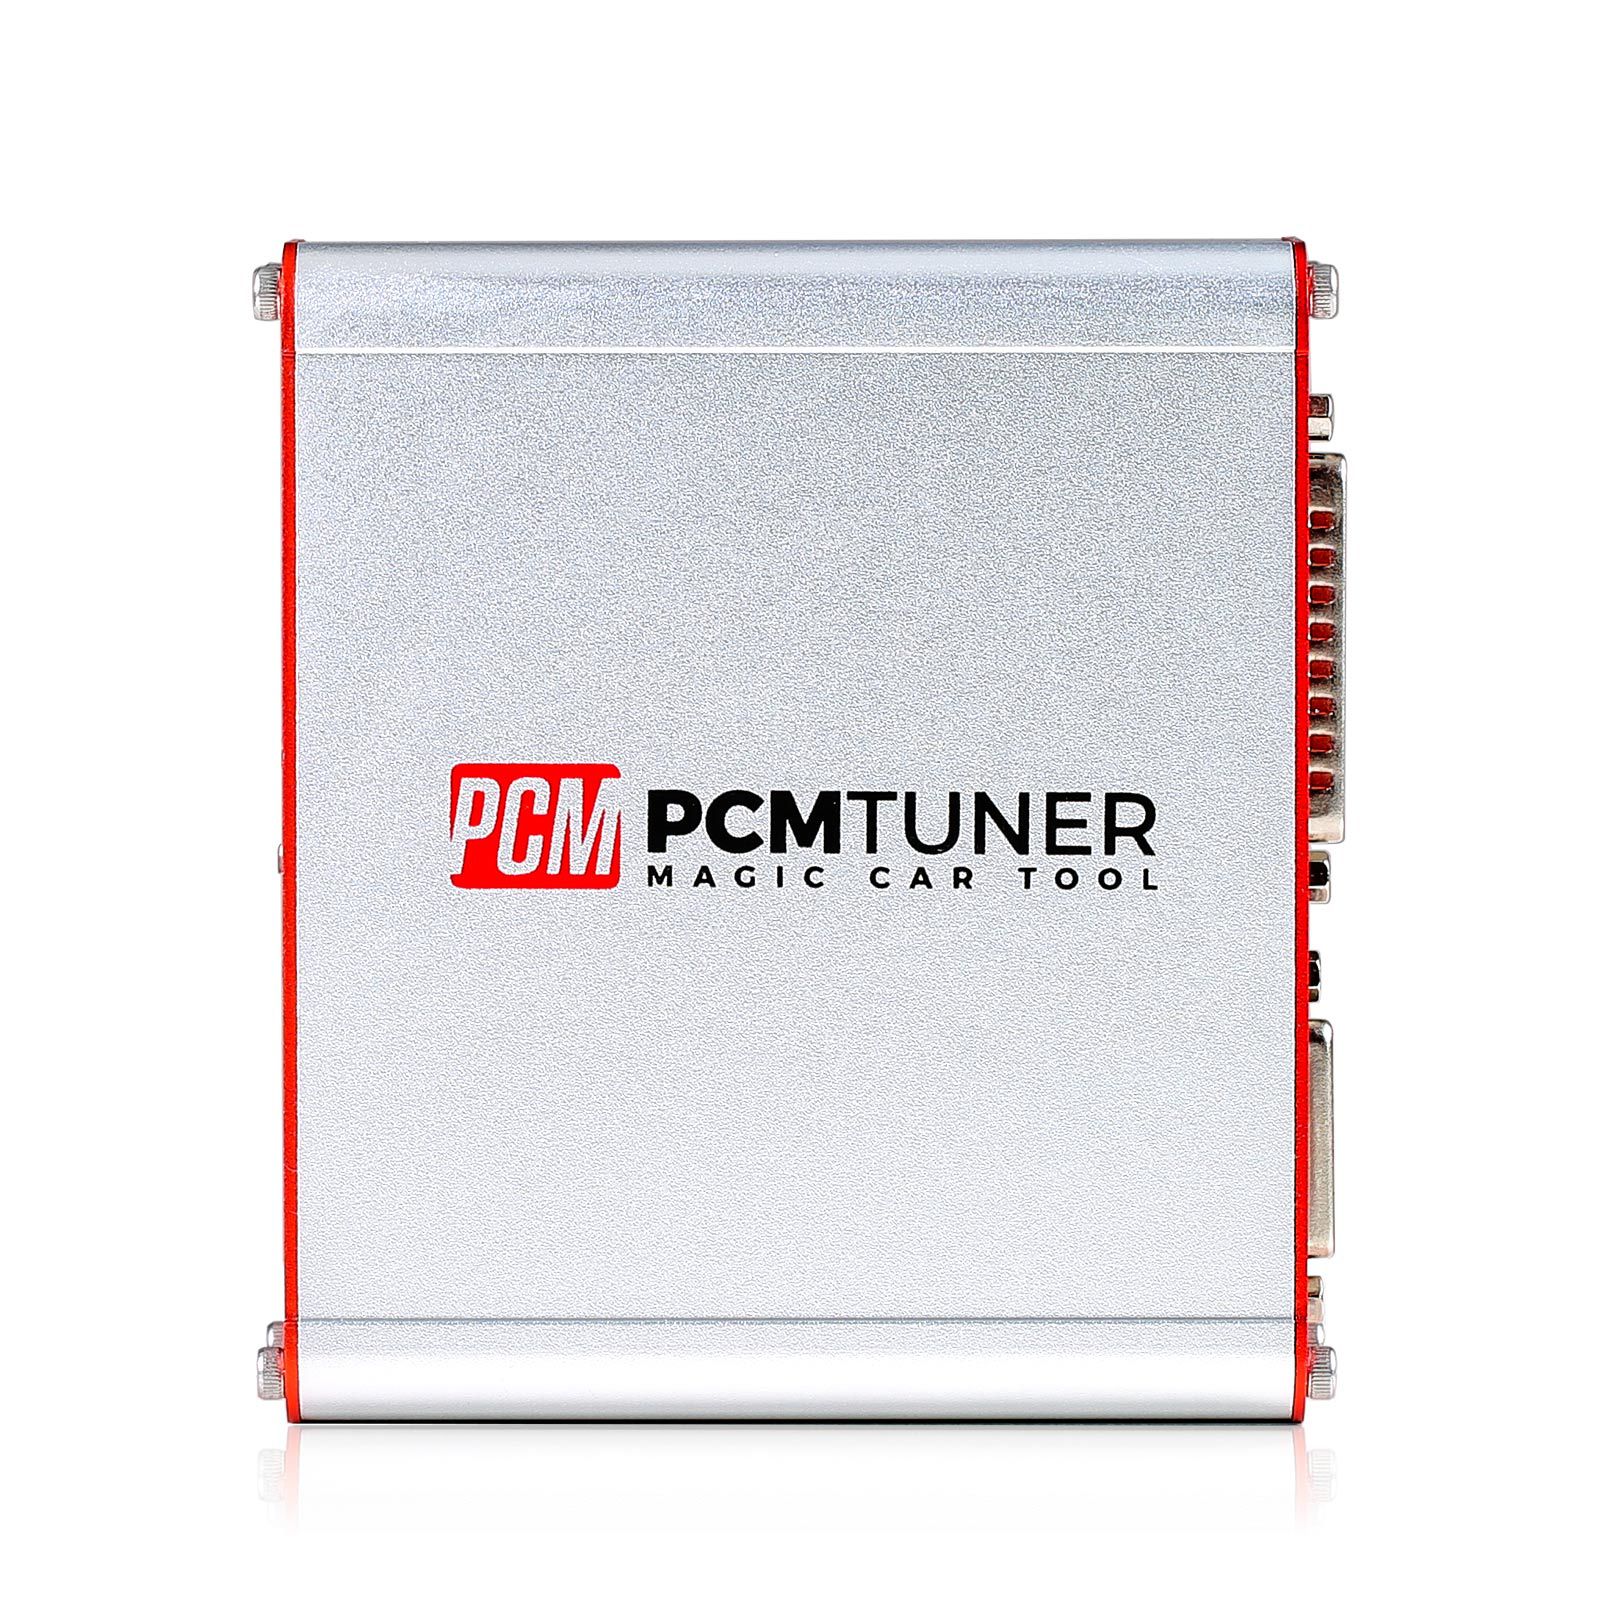 程序员ECU pcmtuner con 67 módulos，con carcasa de silicona y Caja portátil de plástico